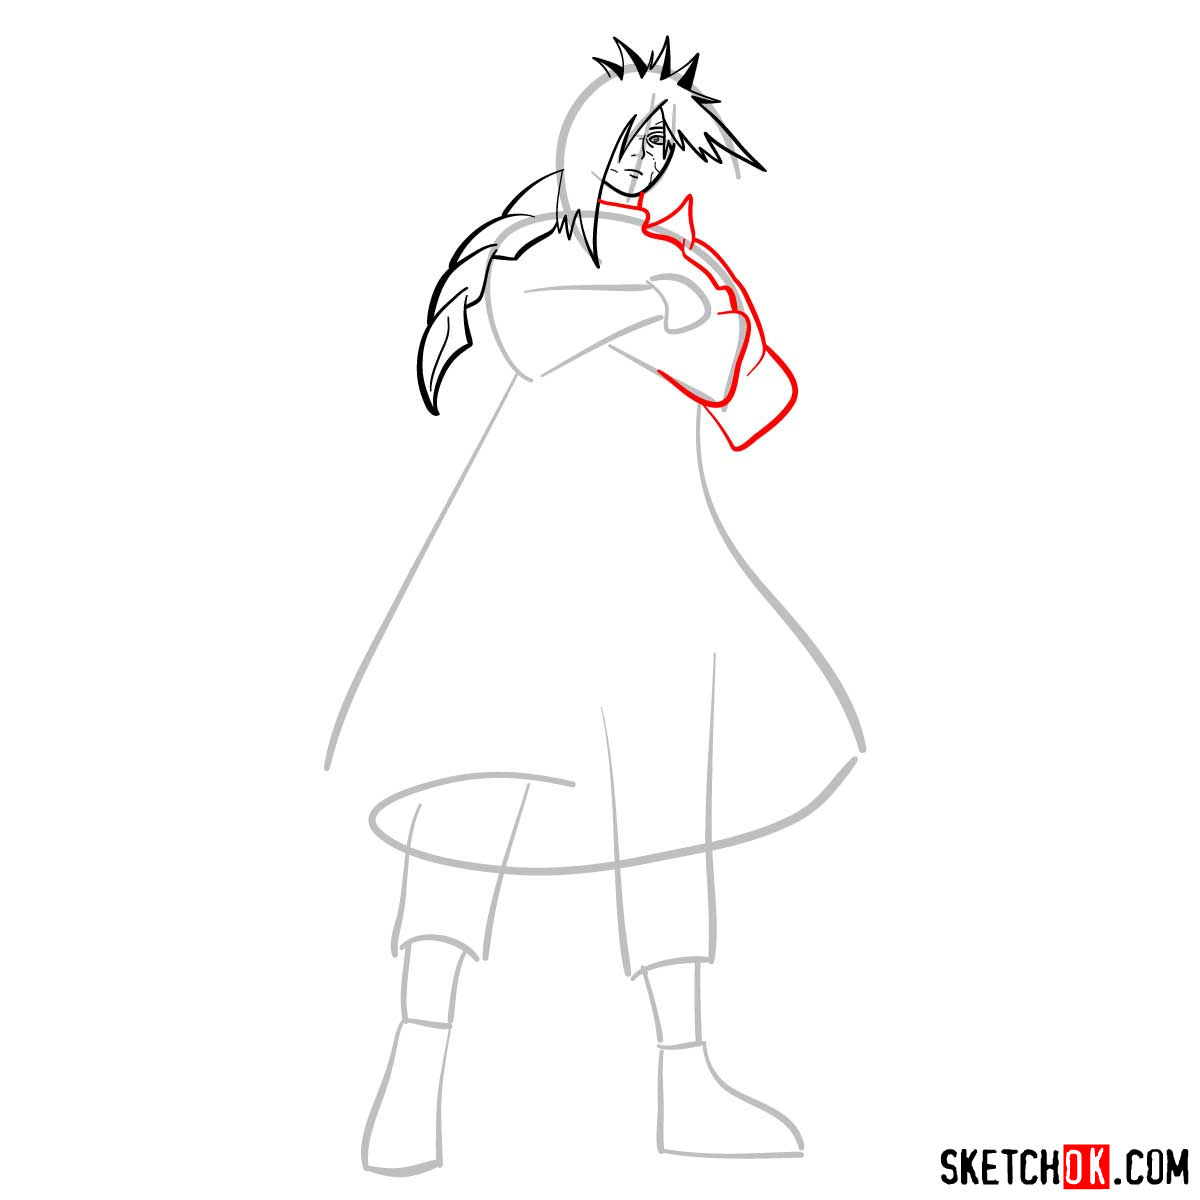 How to draw Madara Uchiha from Naruto anime - step 07